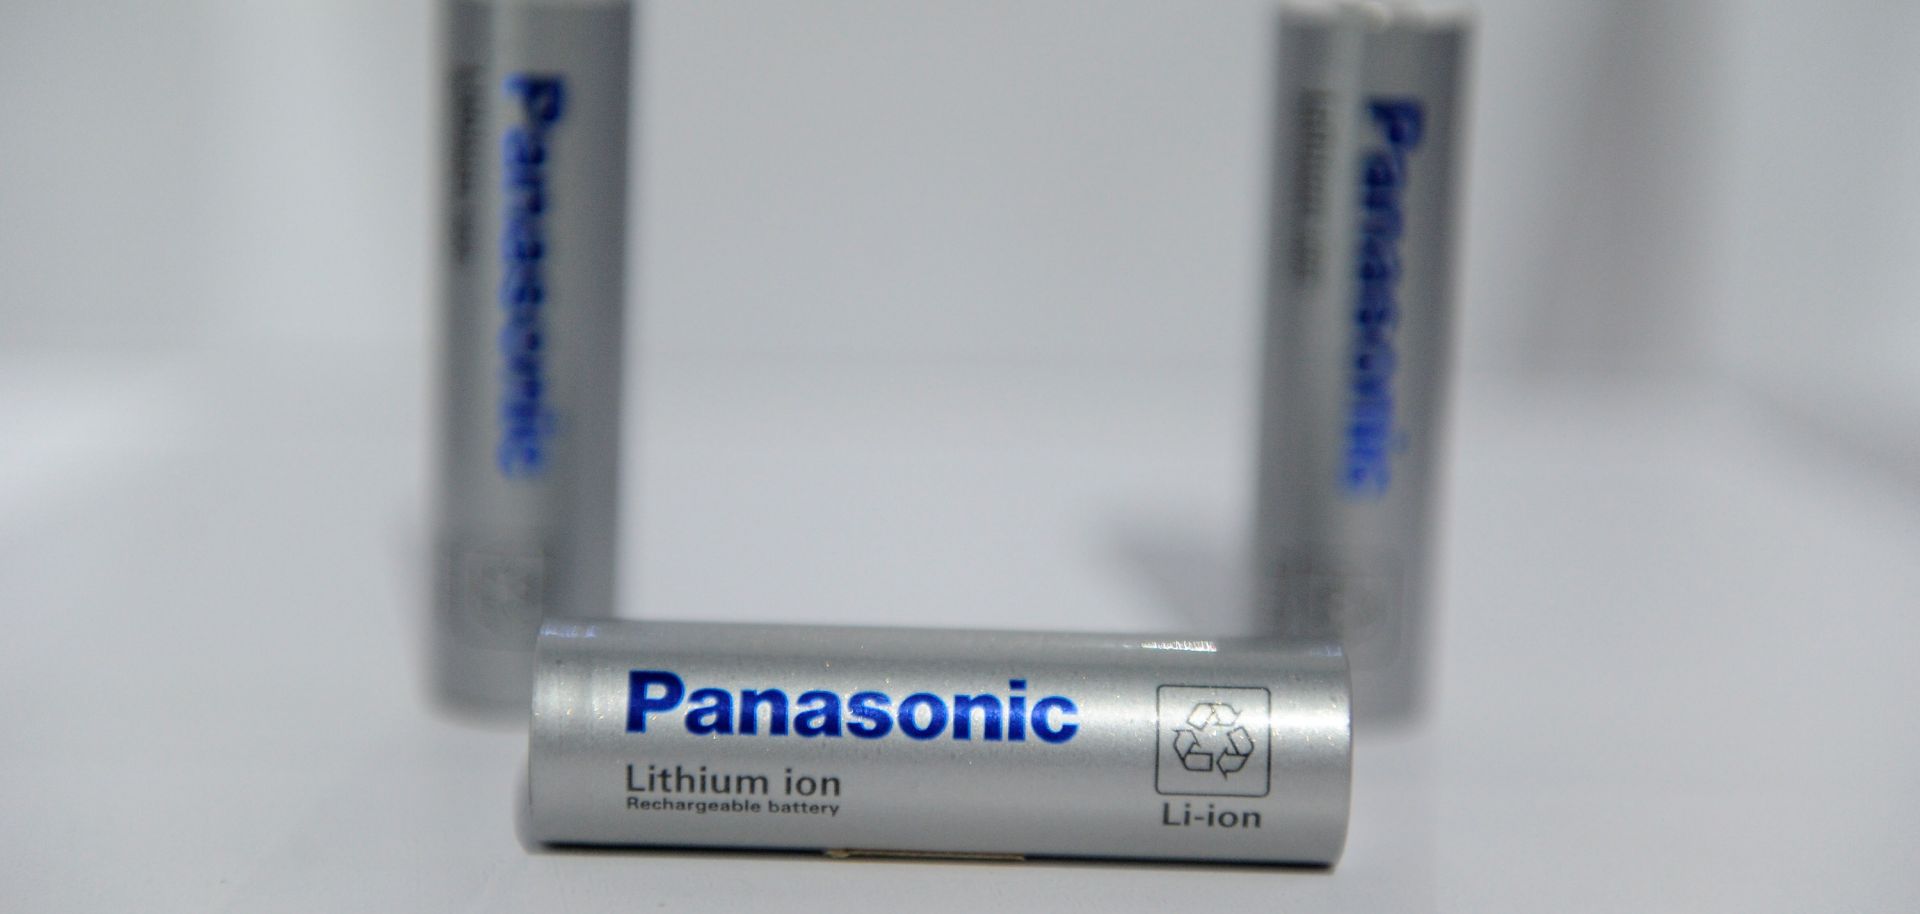 Panasonic's lithium ion batteries are on display.